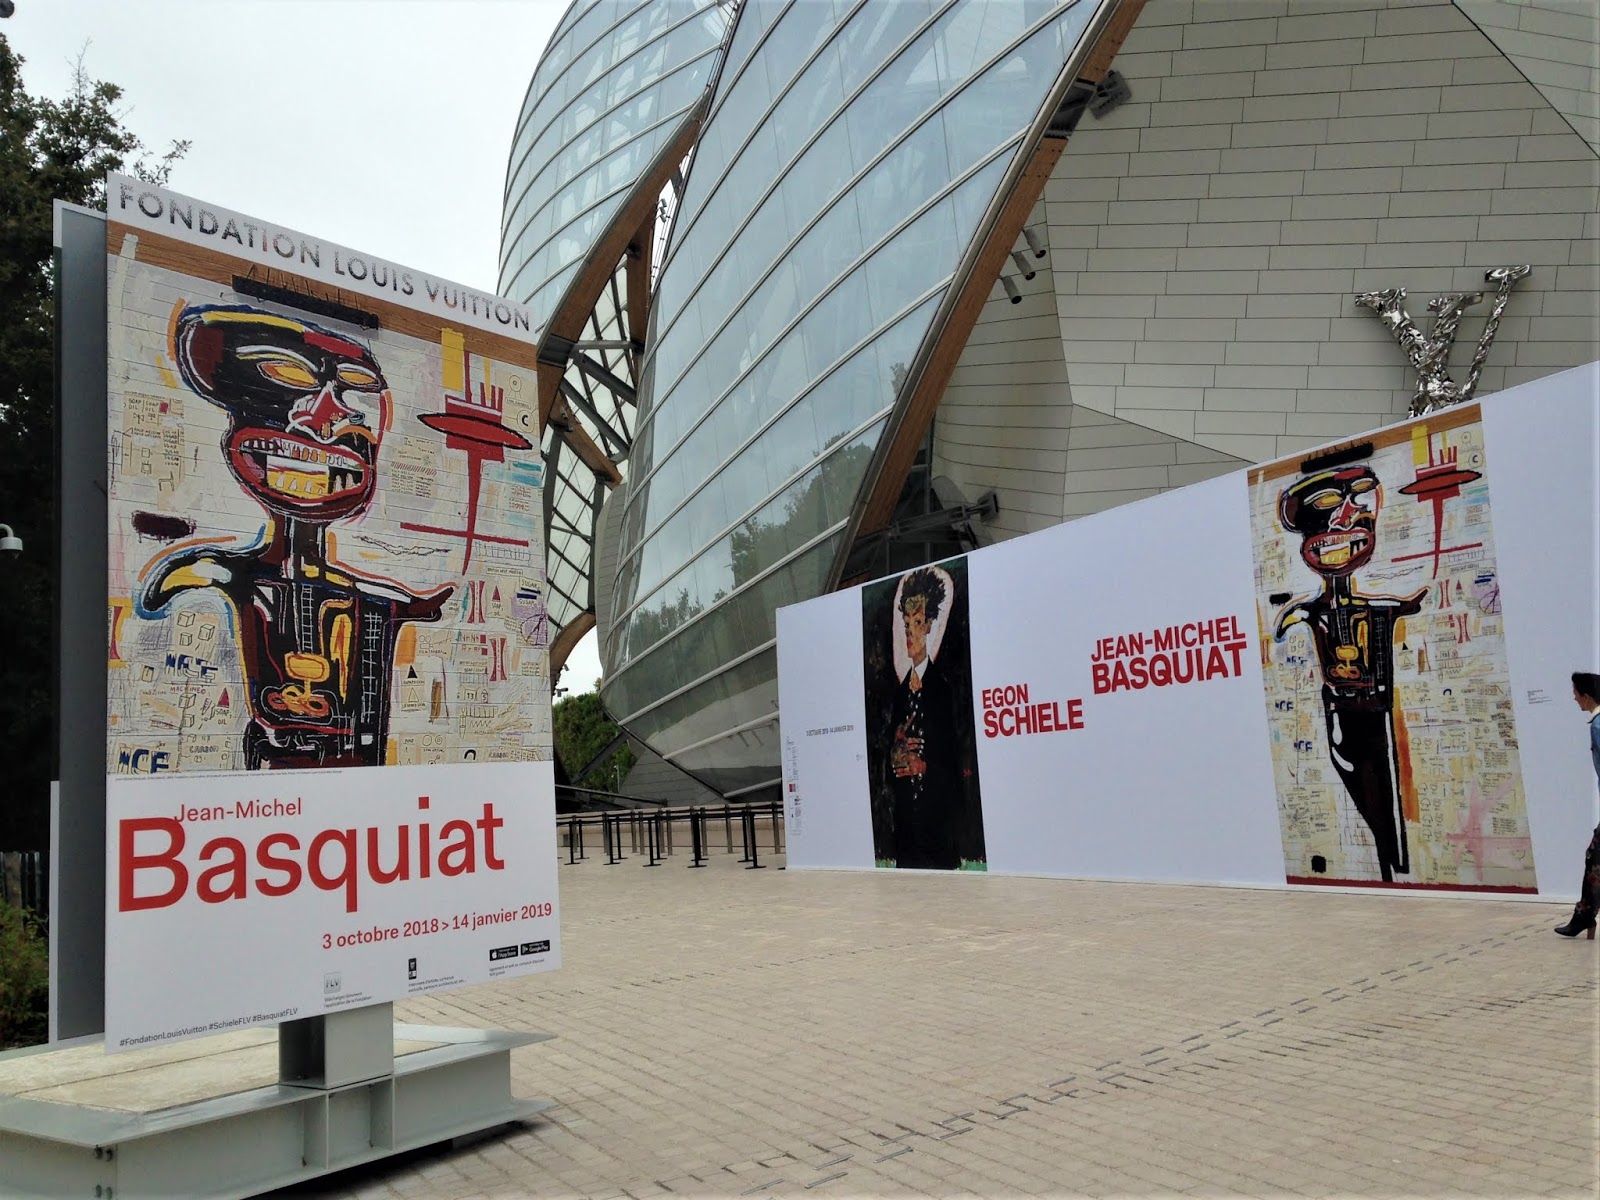 SWAN: BASQUIAT'S ARTISTIC ENERGY BLAZES IN PARIS SHOW